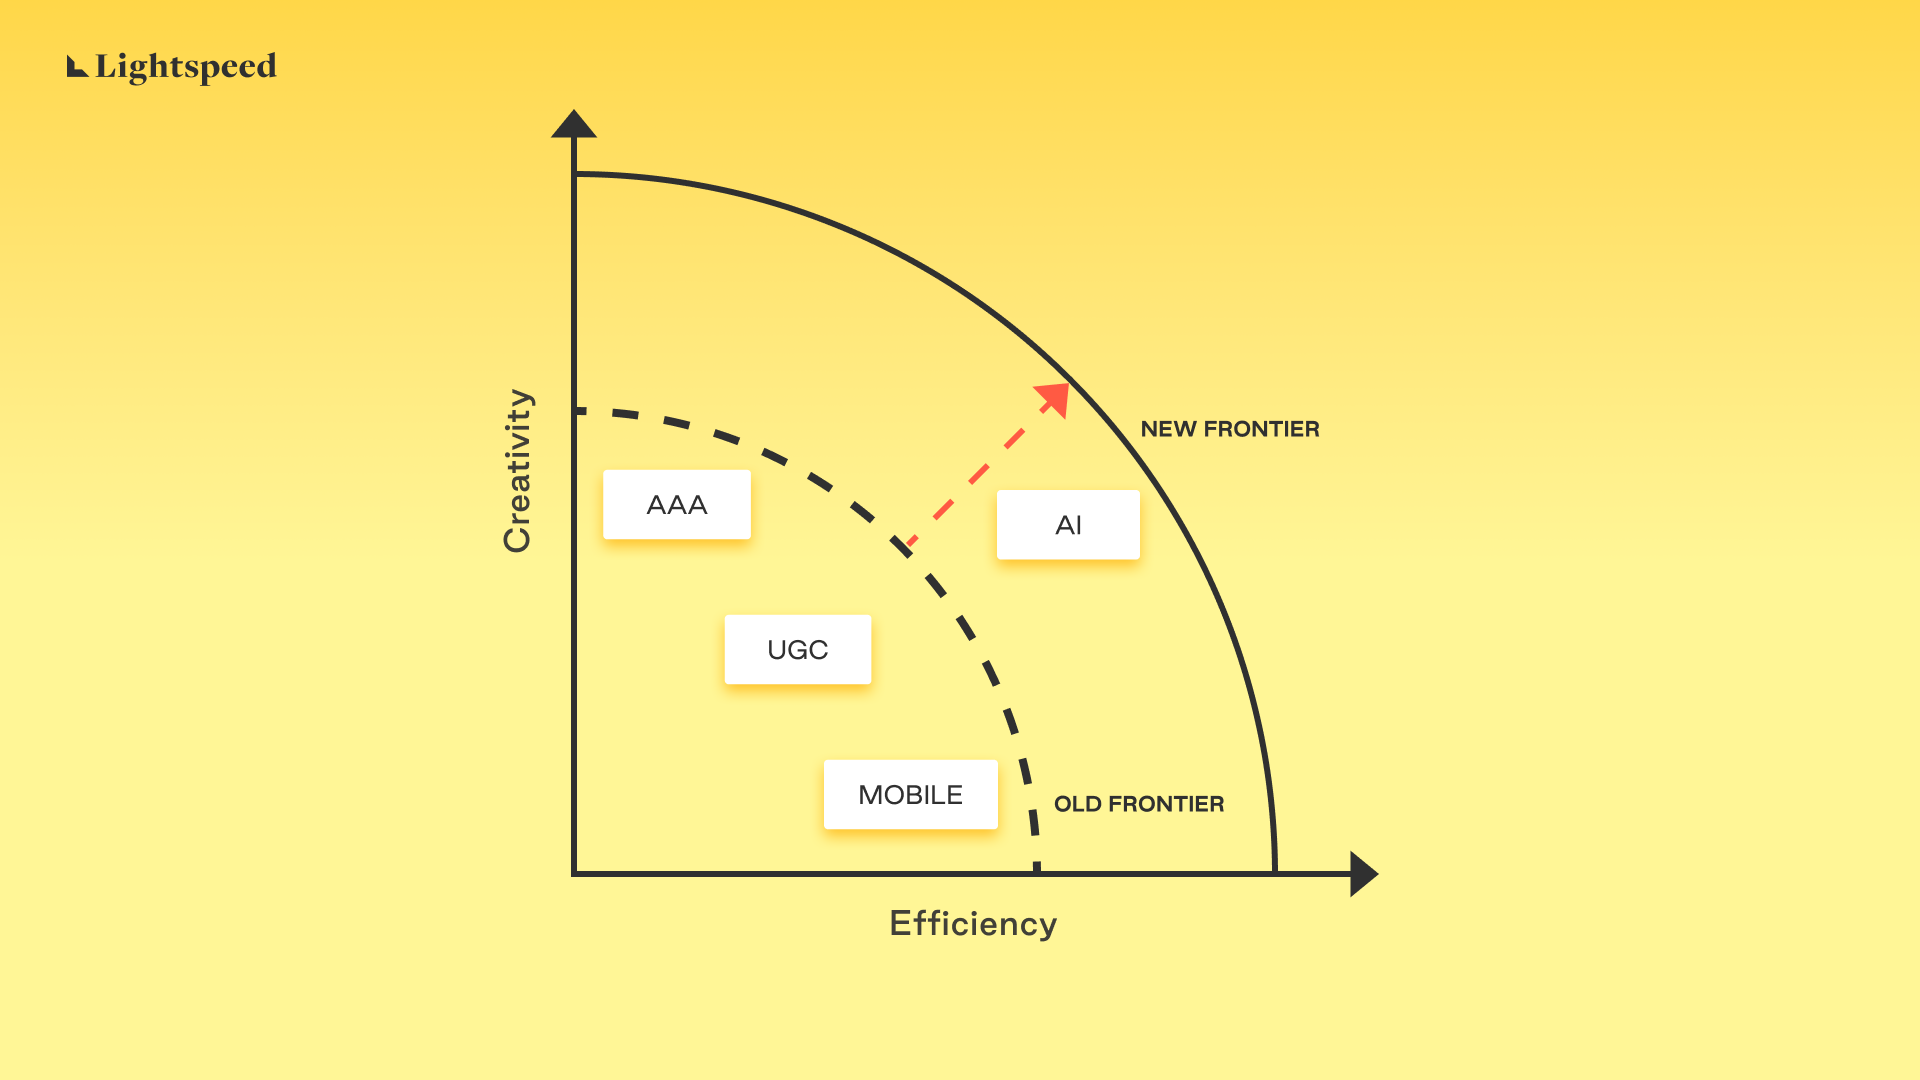 Lightspeed graph on creativity and efficiency